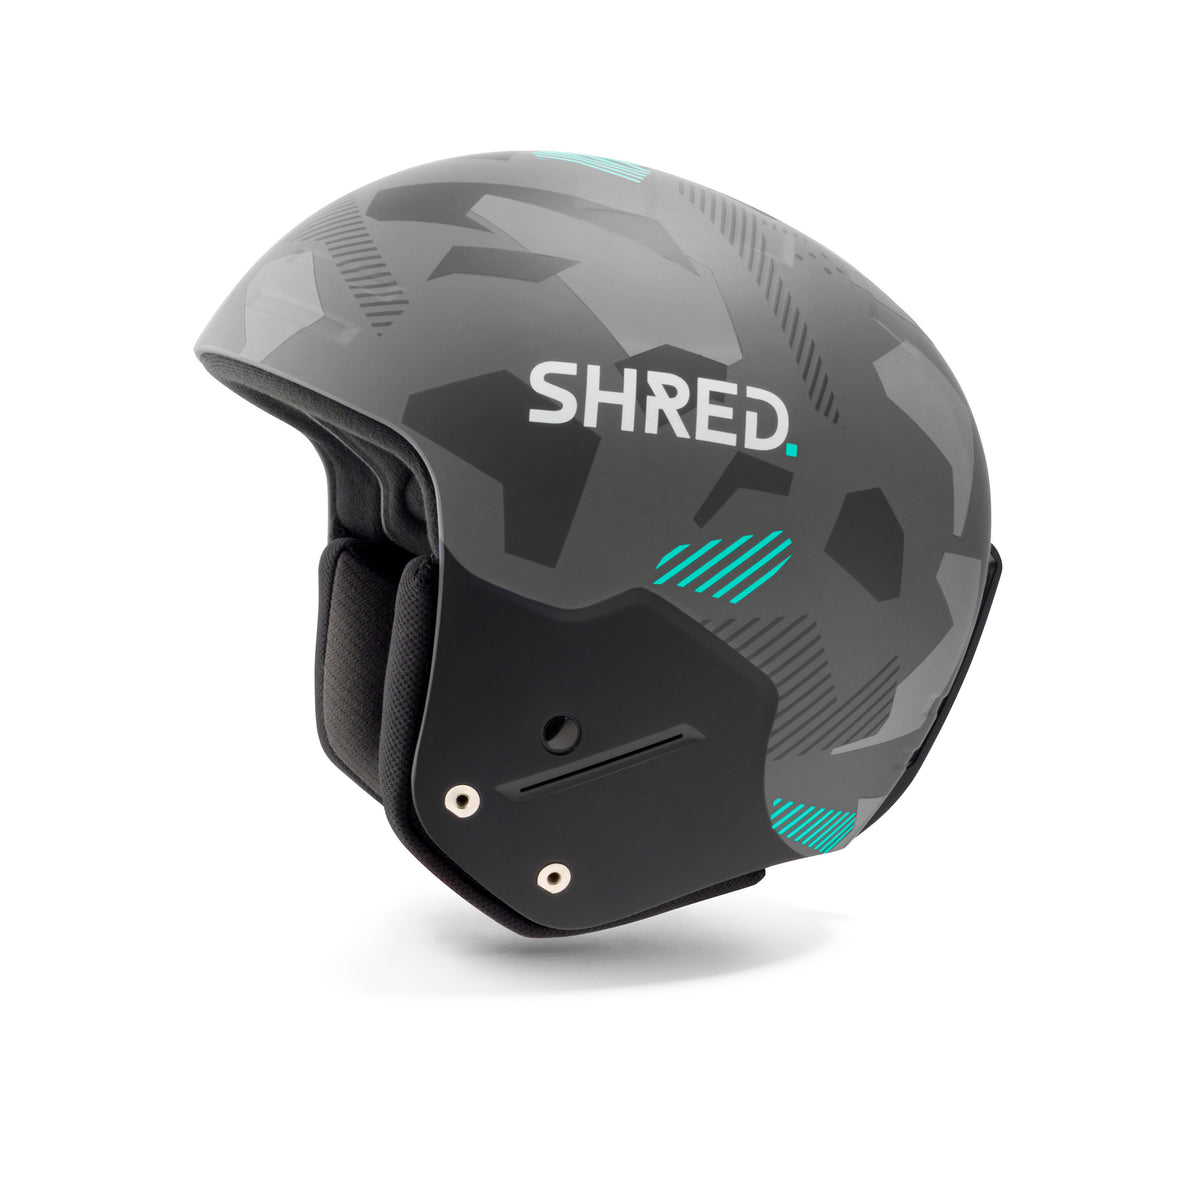 Basher Ultimate - Ski Helmets - SHRED.